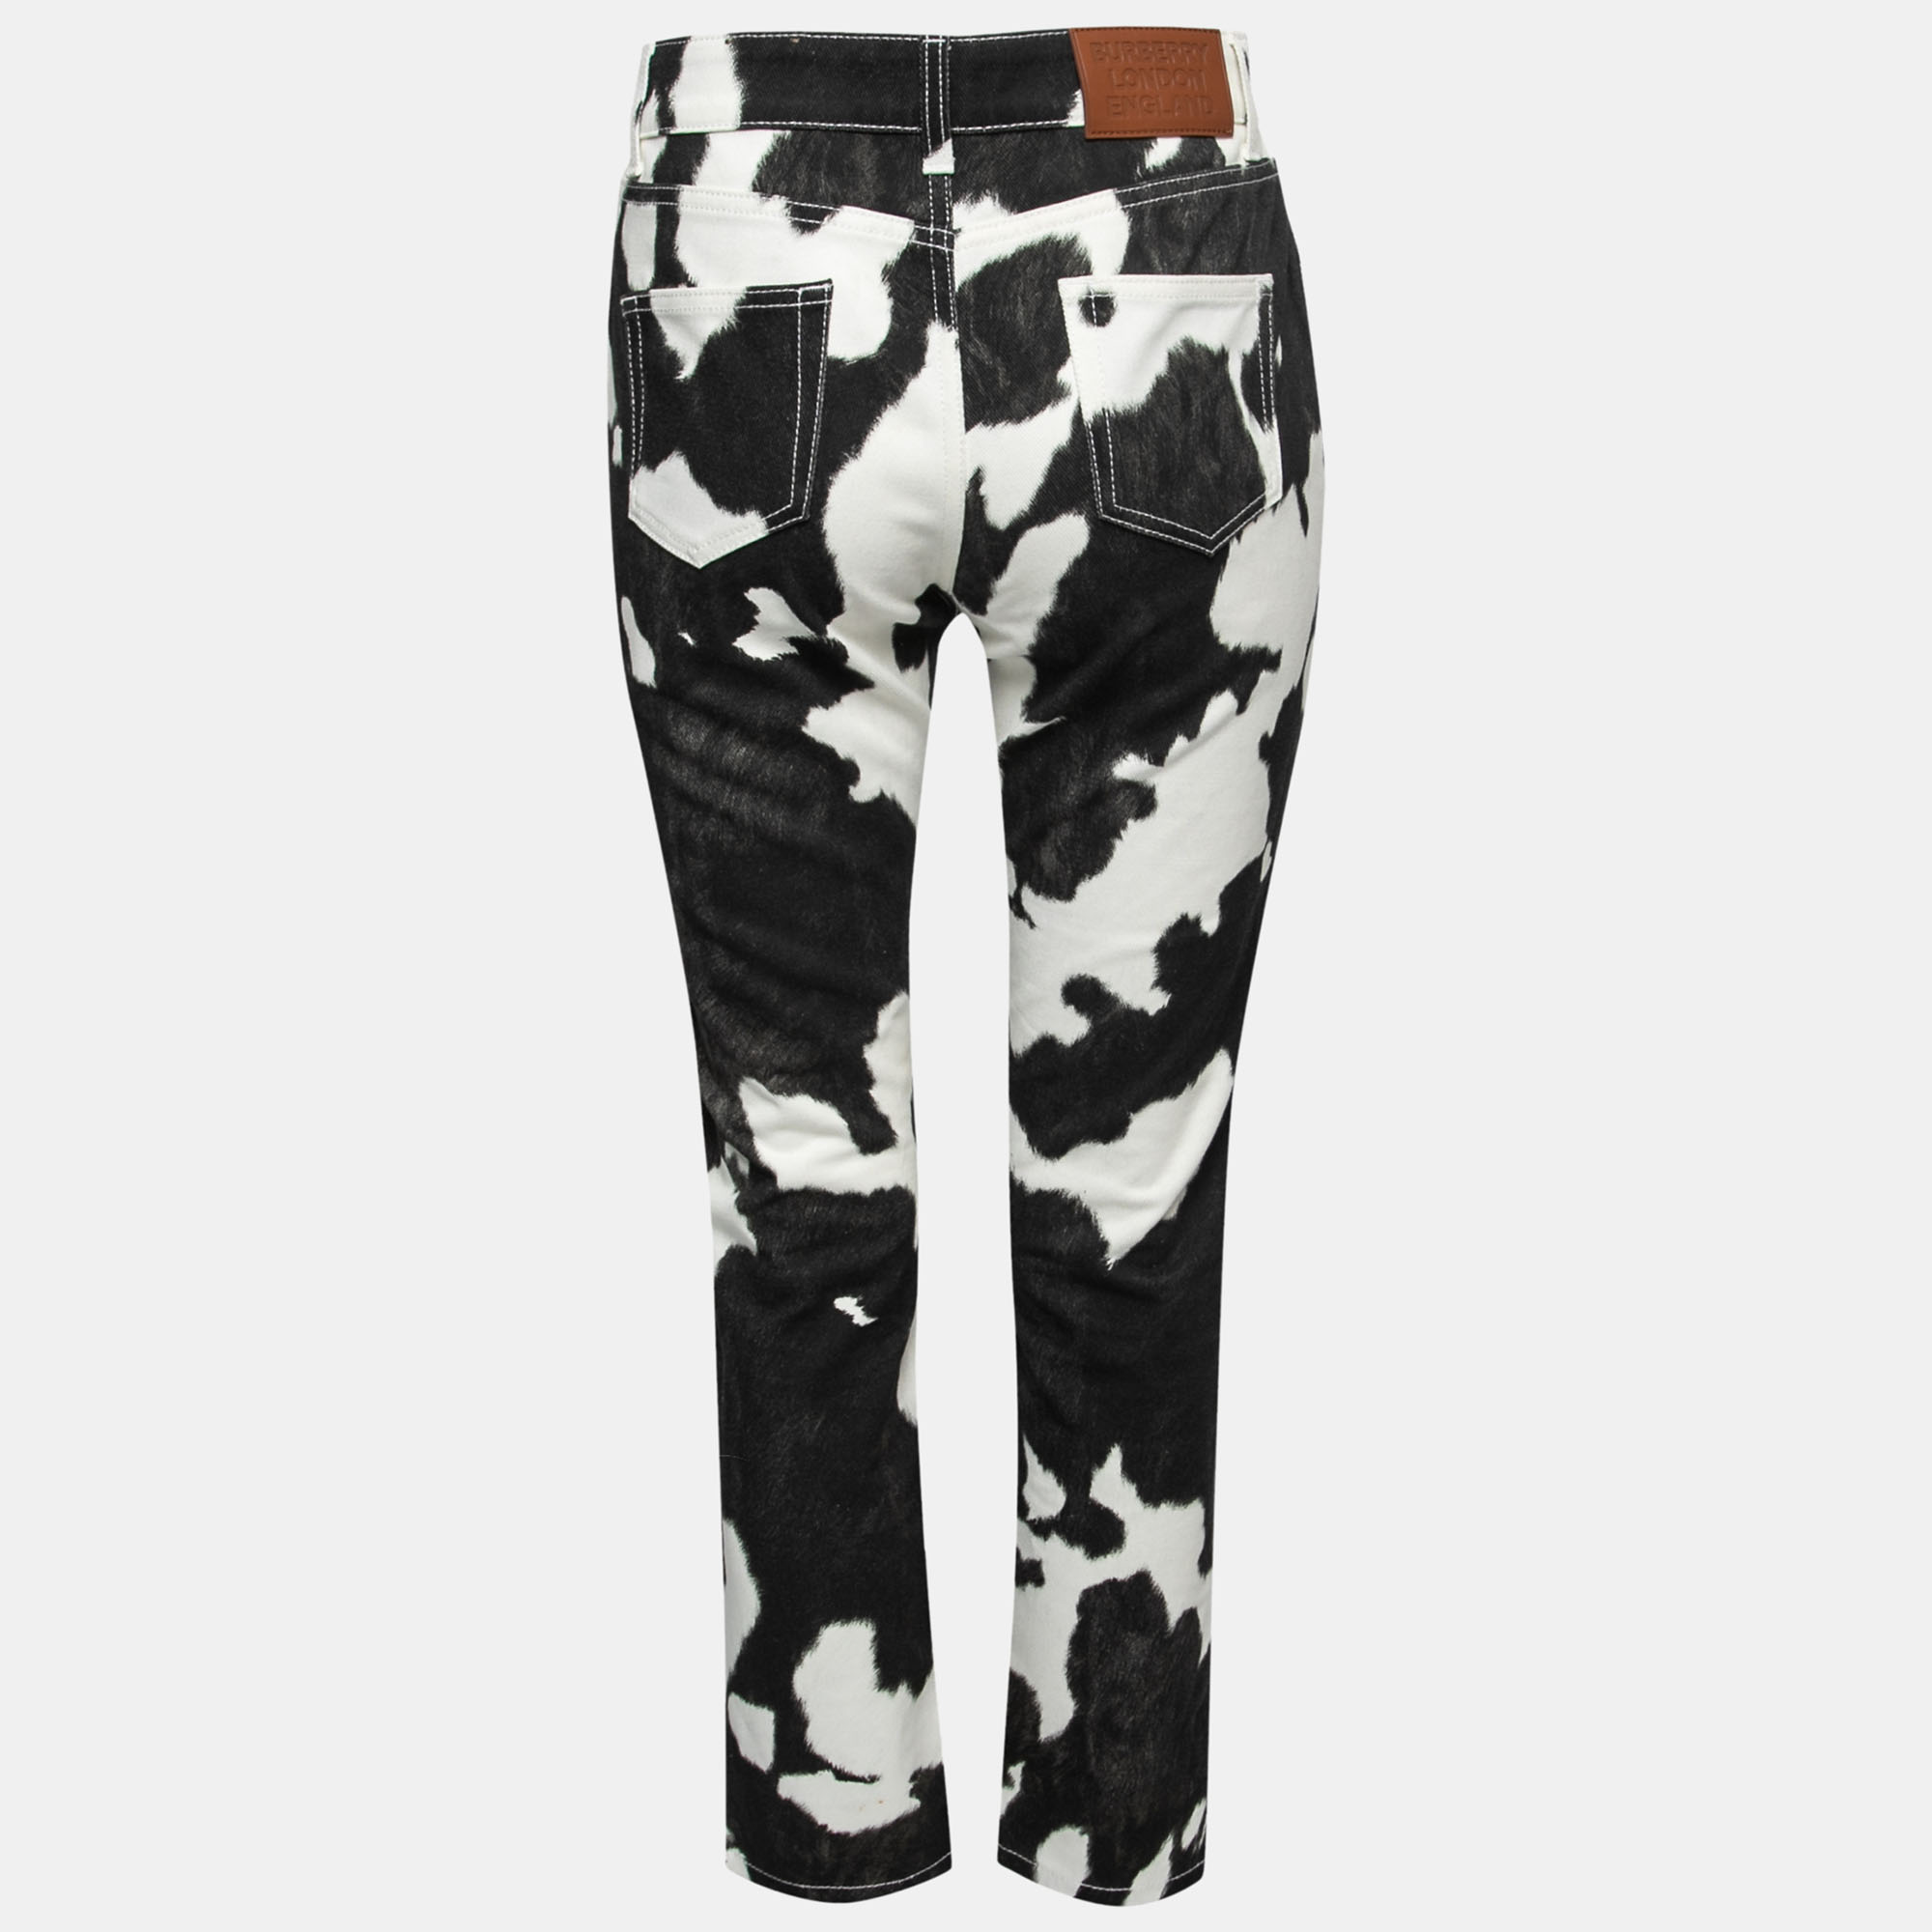  Burberry Monochrome Cow Print Denim Slim Fit Jeans S Waist 25